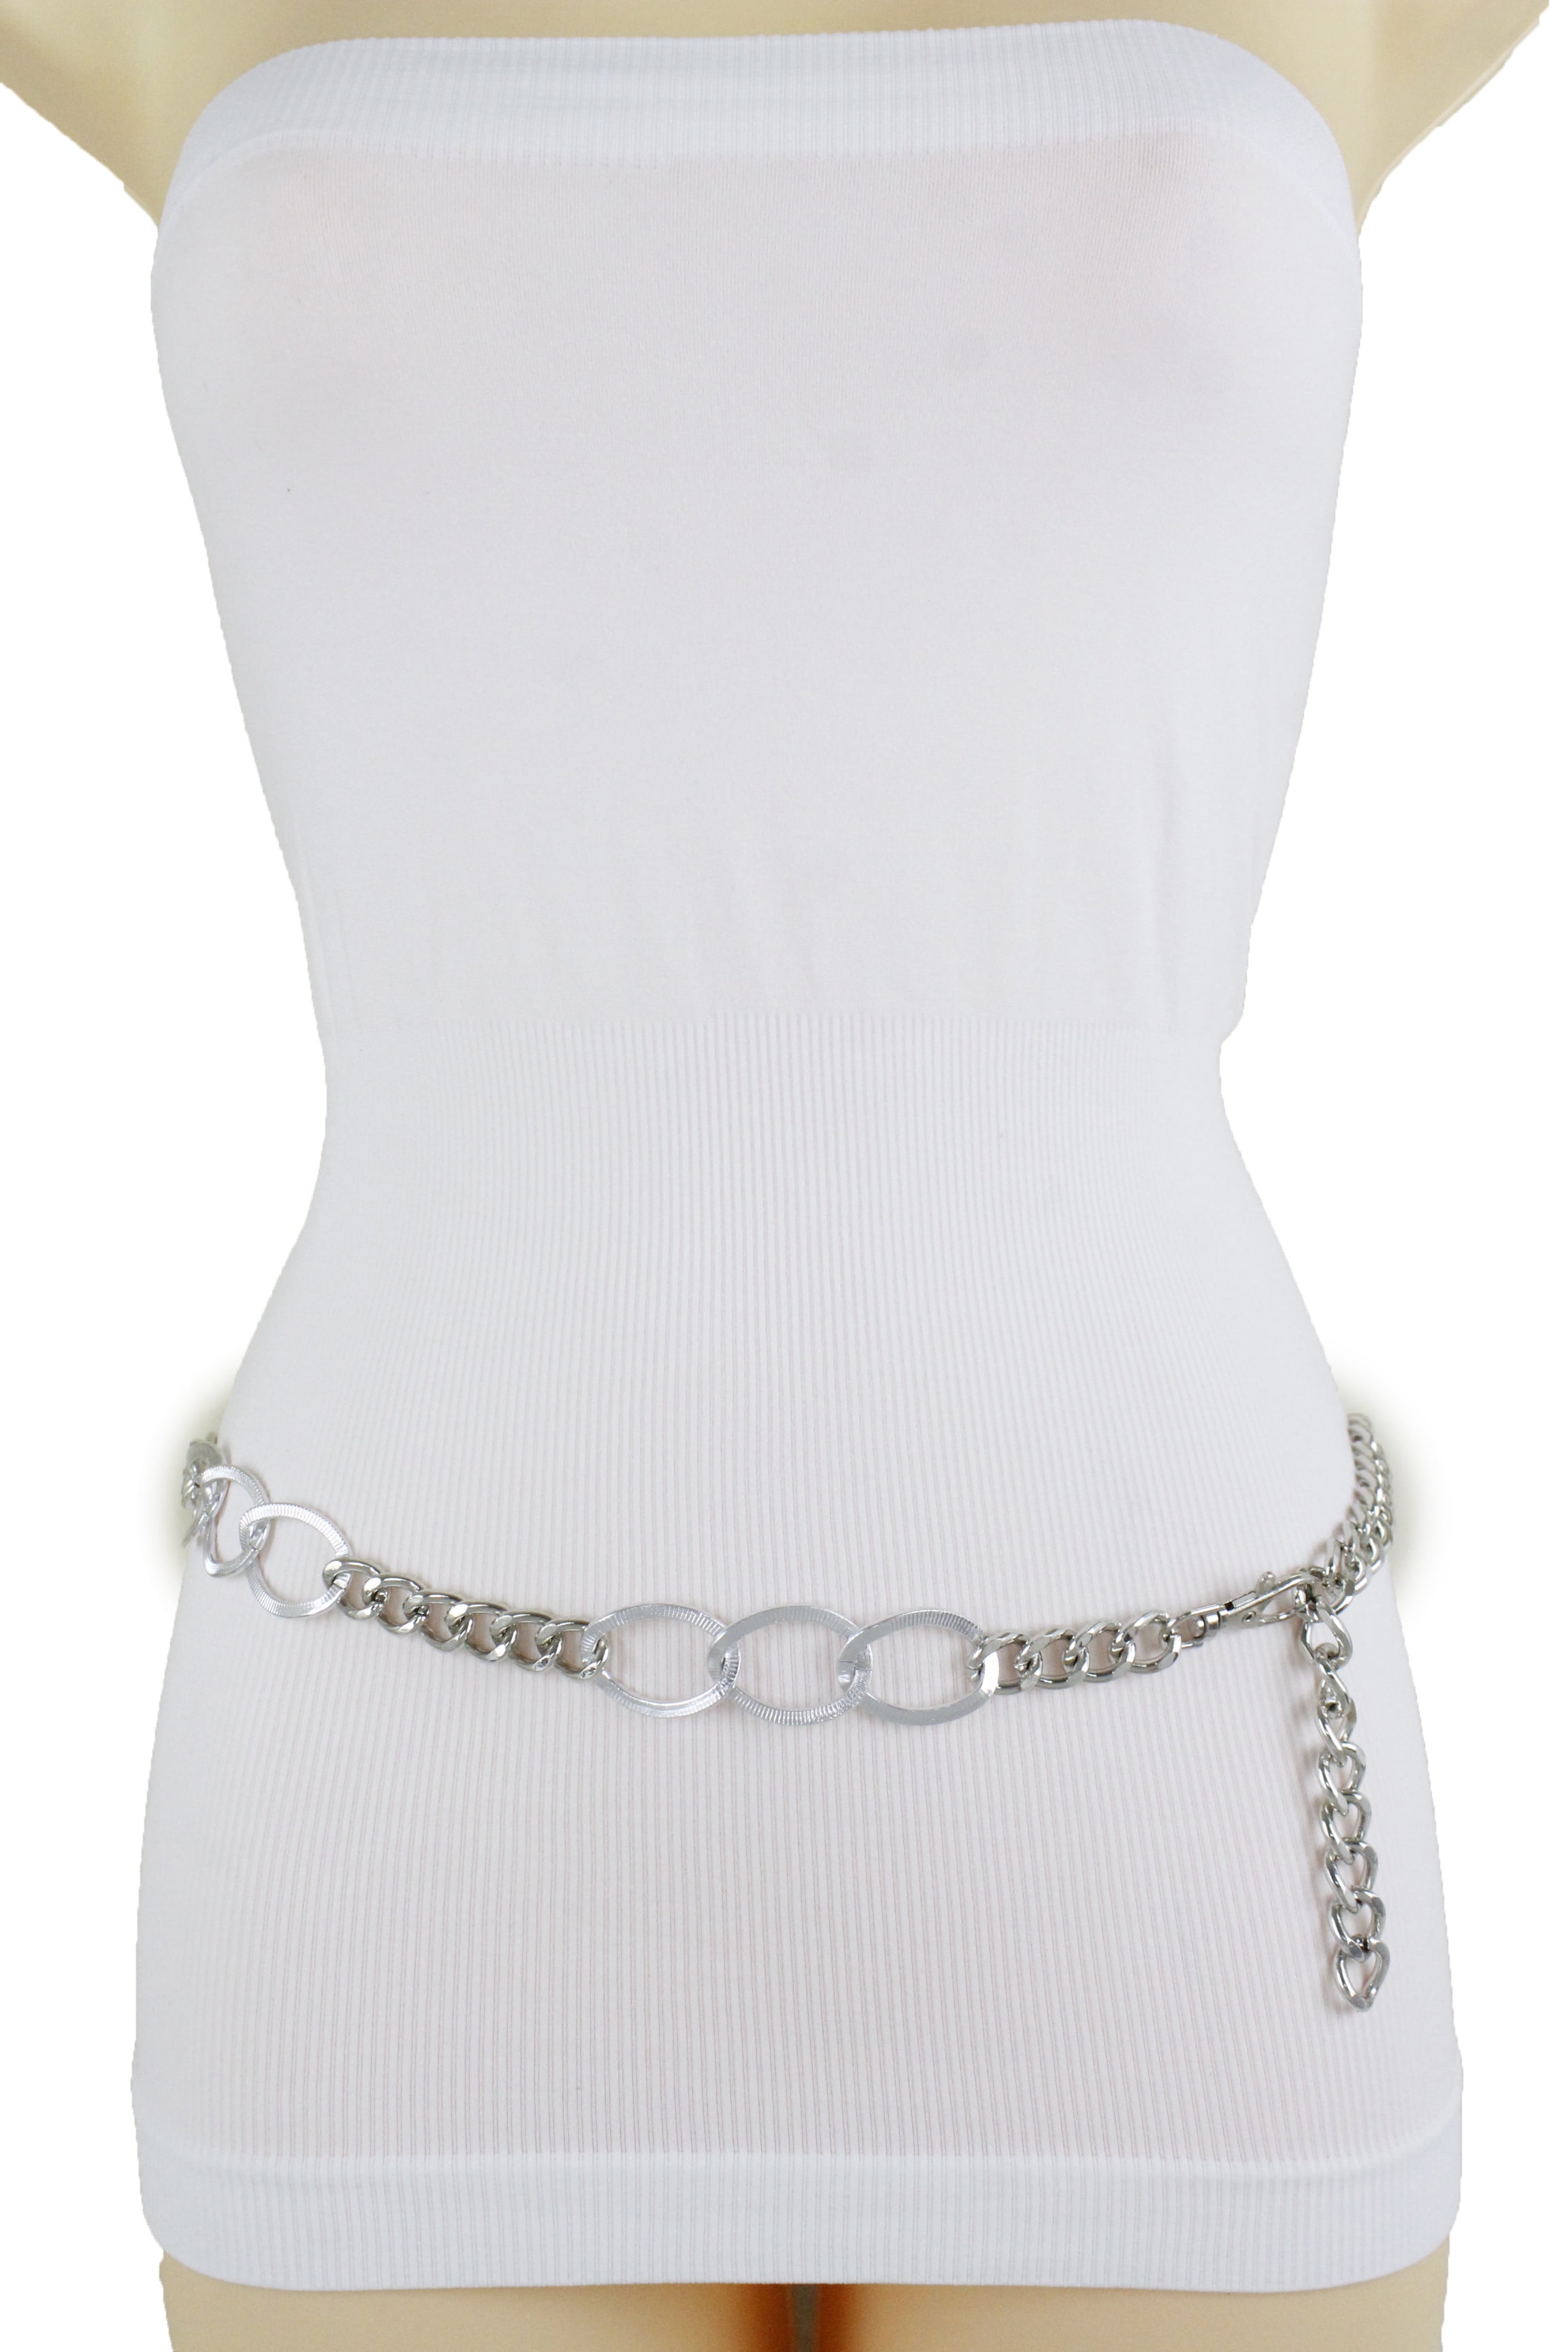 Women Belt Silver Chunky Metal Chain Thick Link Hip Waist Bling Plus Size M L XL 